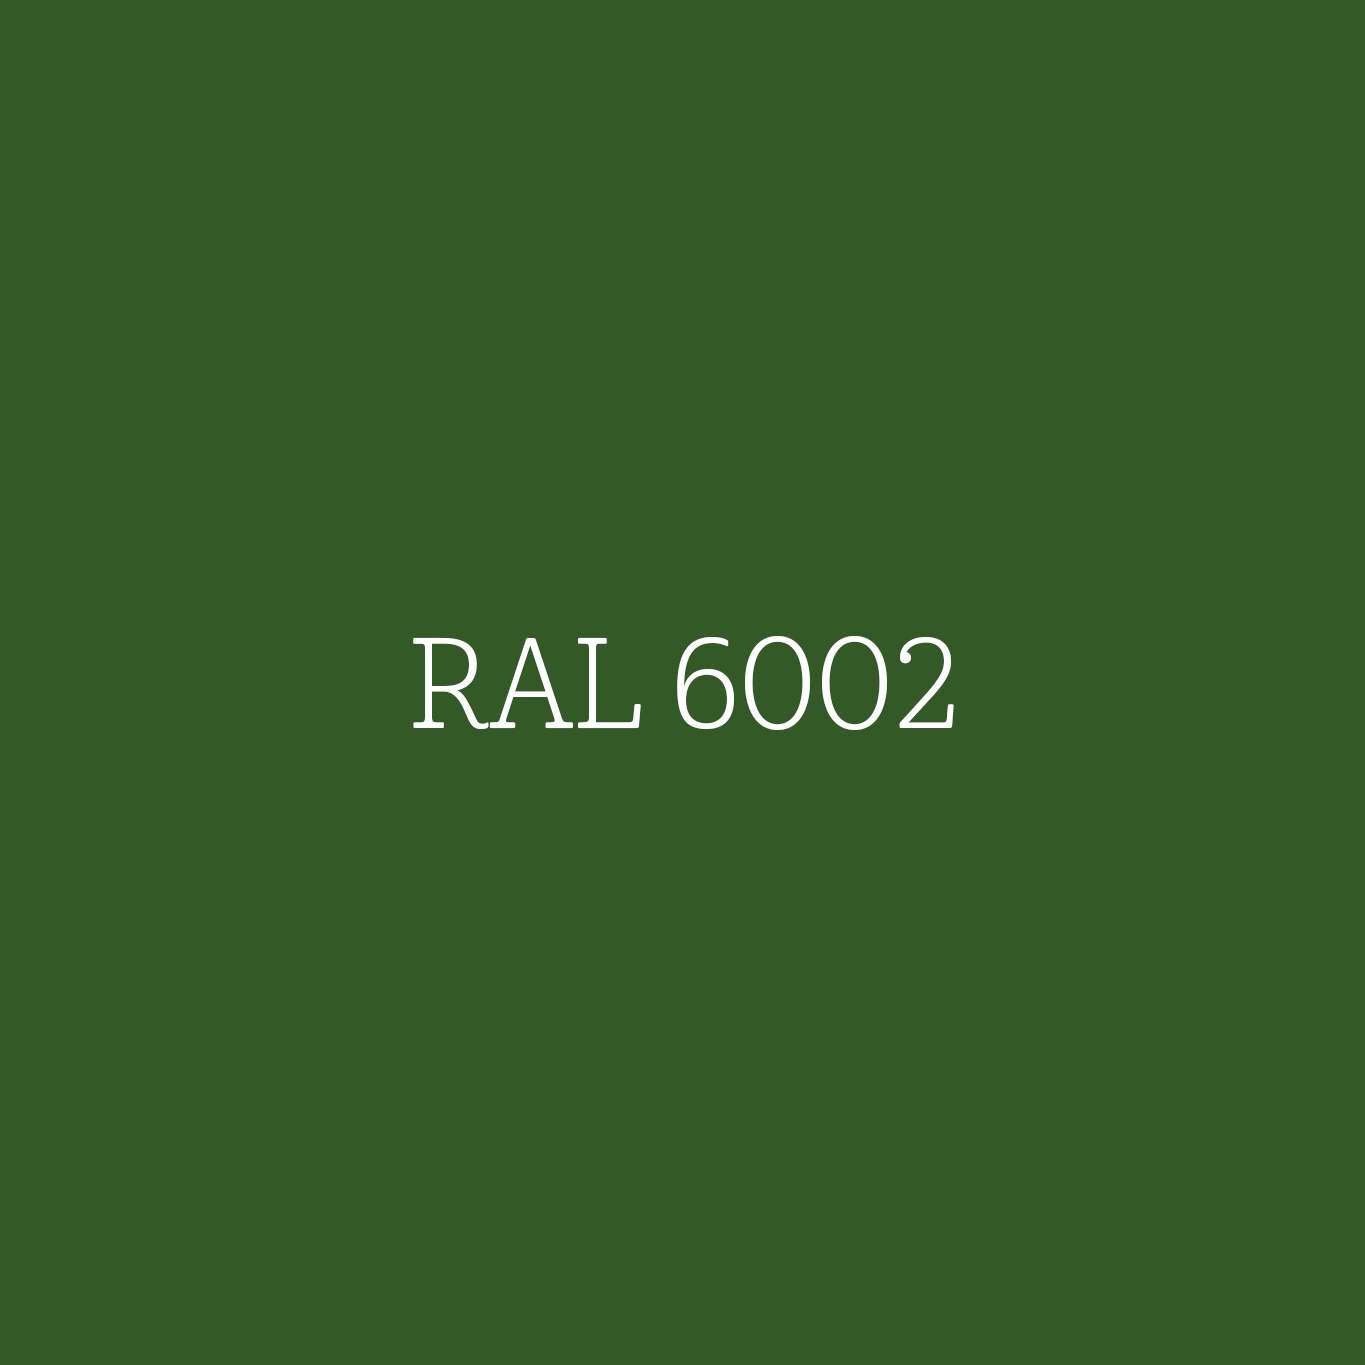 Nachtvlek bevestig alstublieft leveren RAL 6002 Leaf Green - matte muurverf l'Authentique